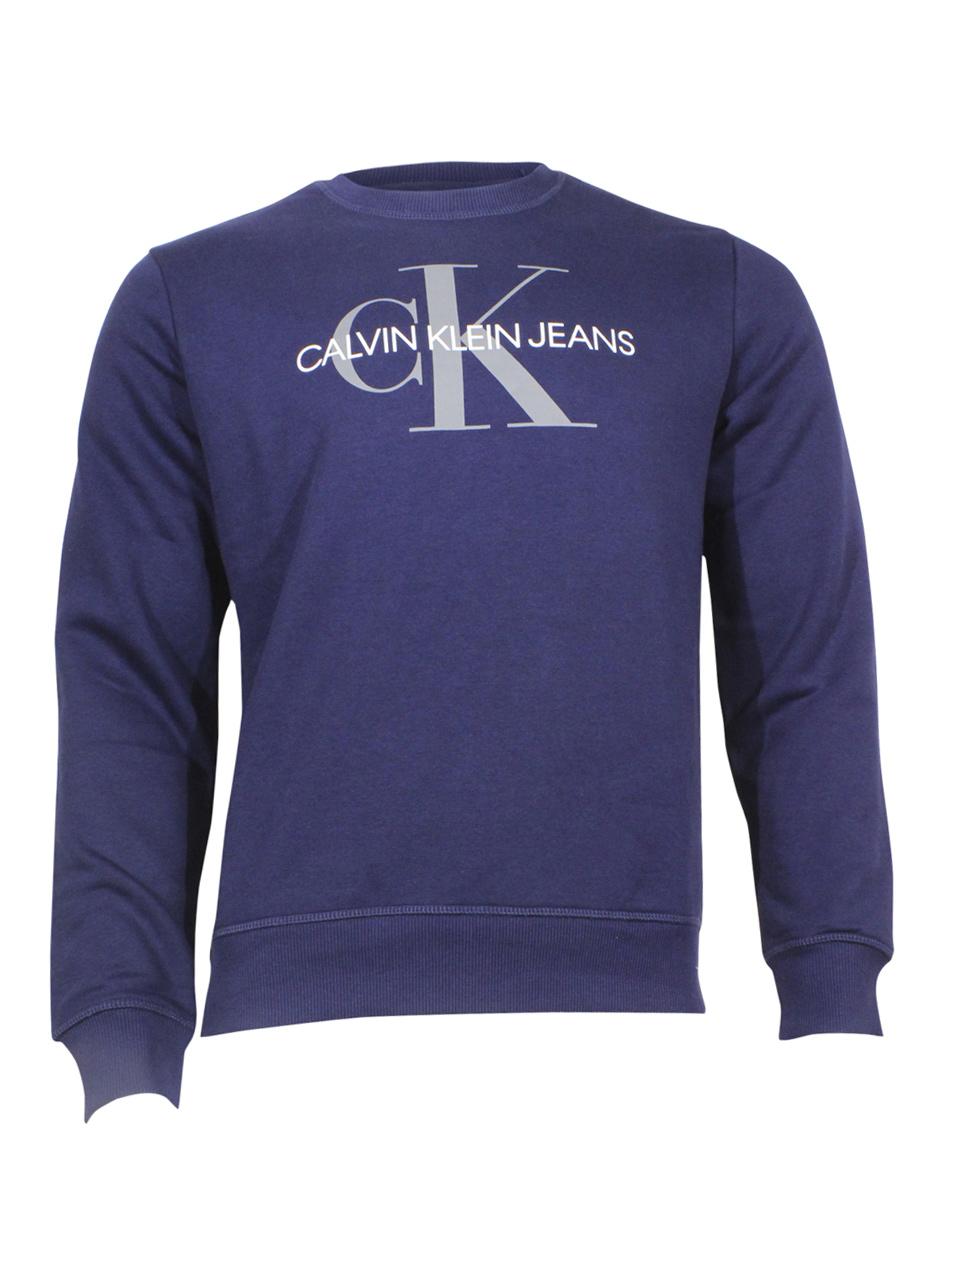 CALVIN KLEIN JEANS - Men's monogram logo sweatshirt 